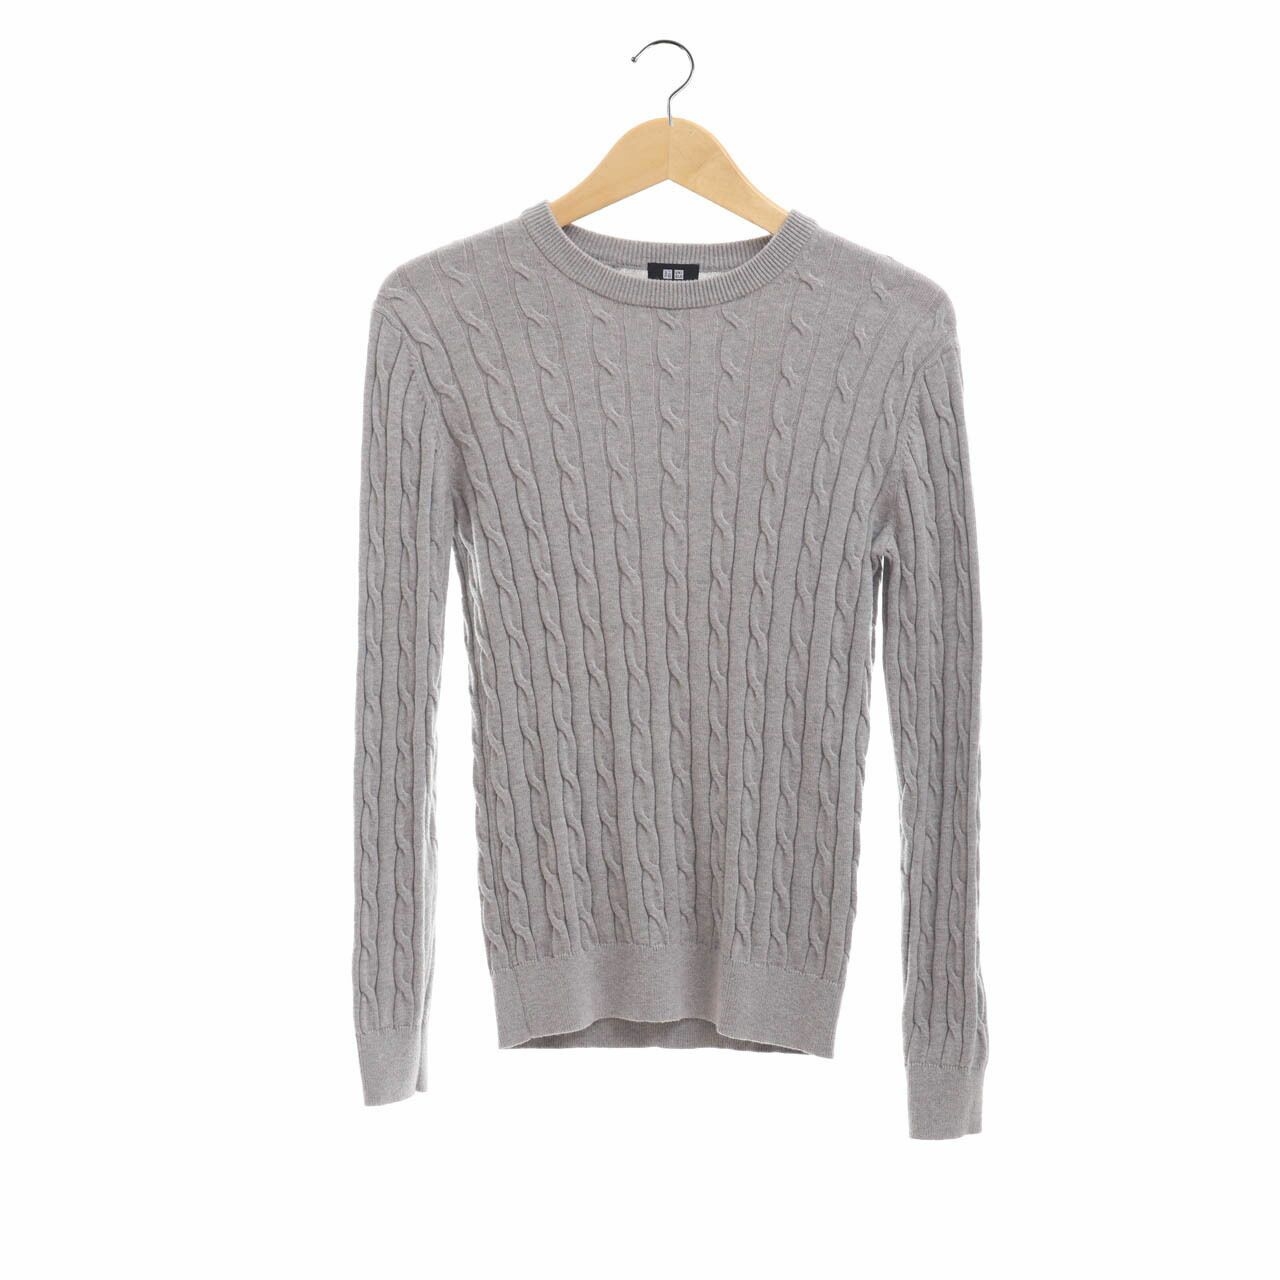 UNIQLO Grey Knit Sweater